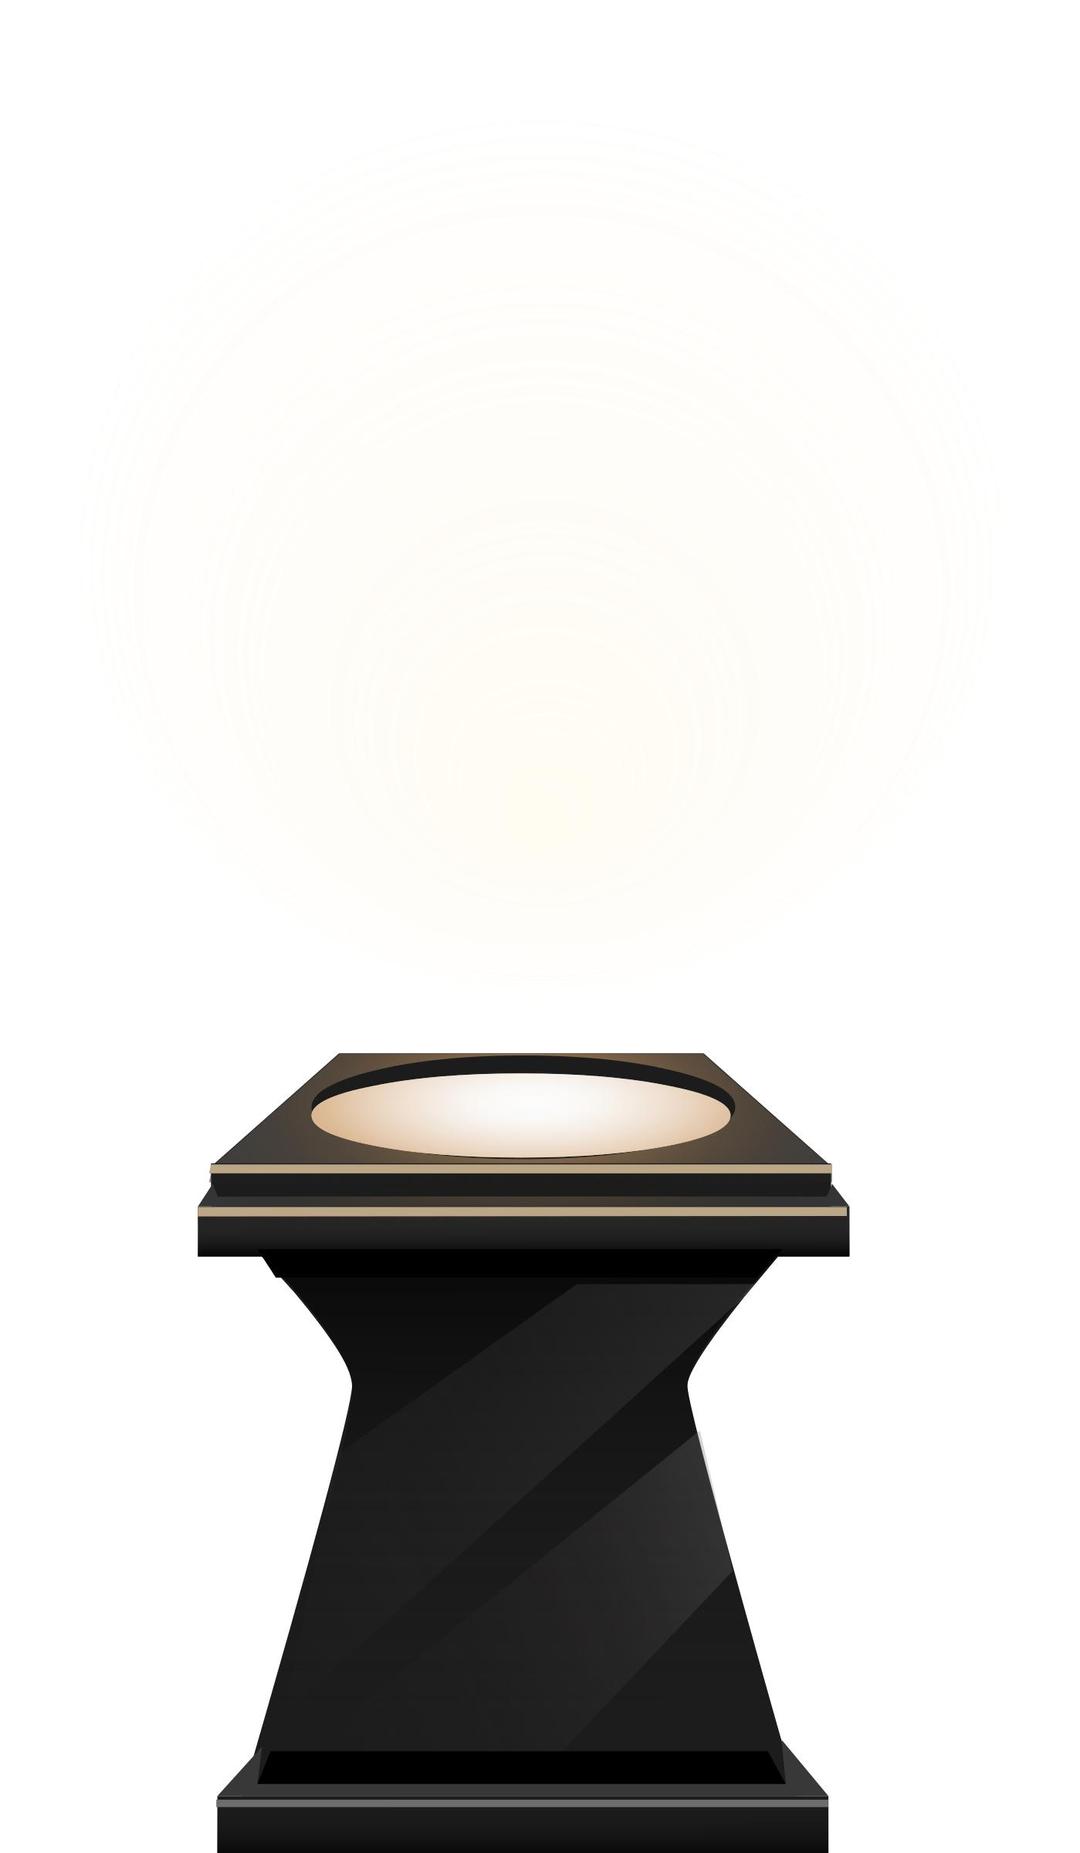 Spotlight pedestal from Glitch png transparent